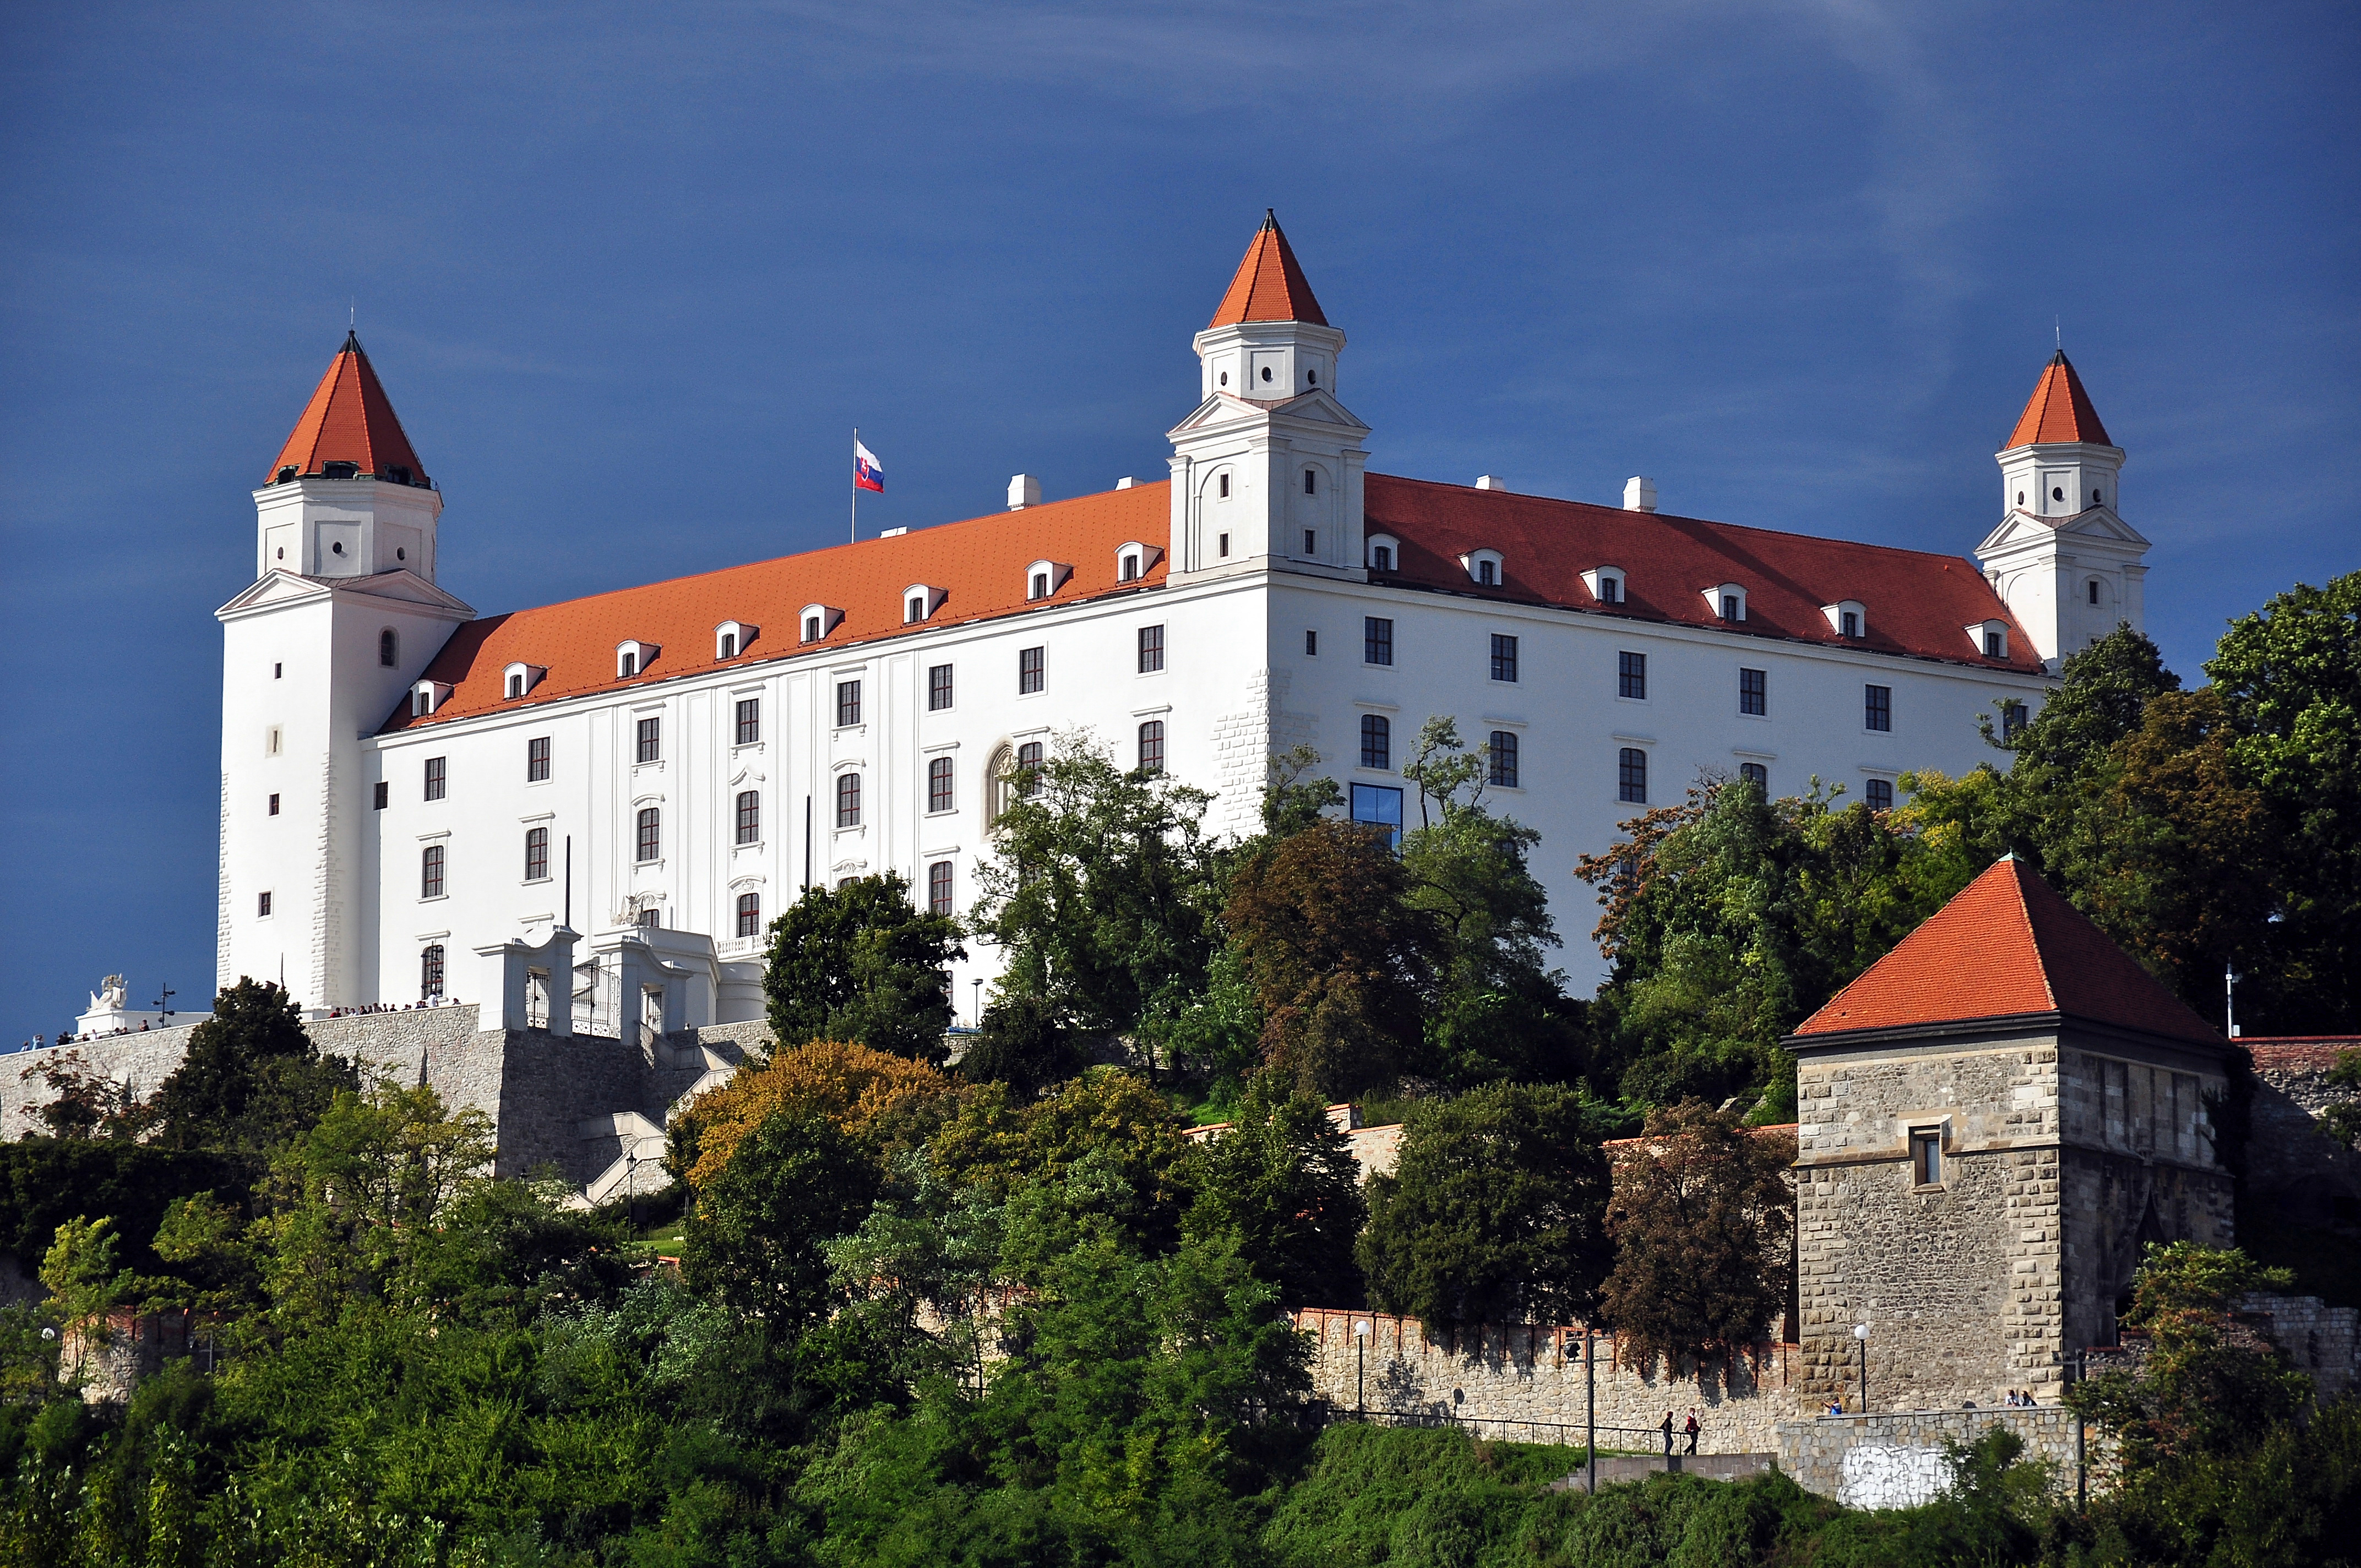 Bratislava slott